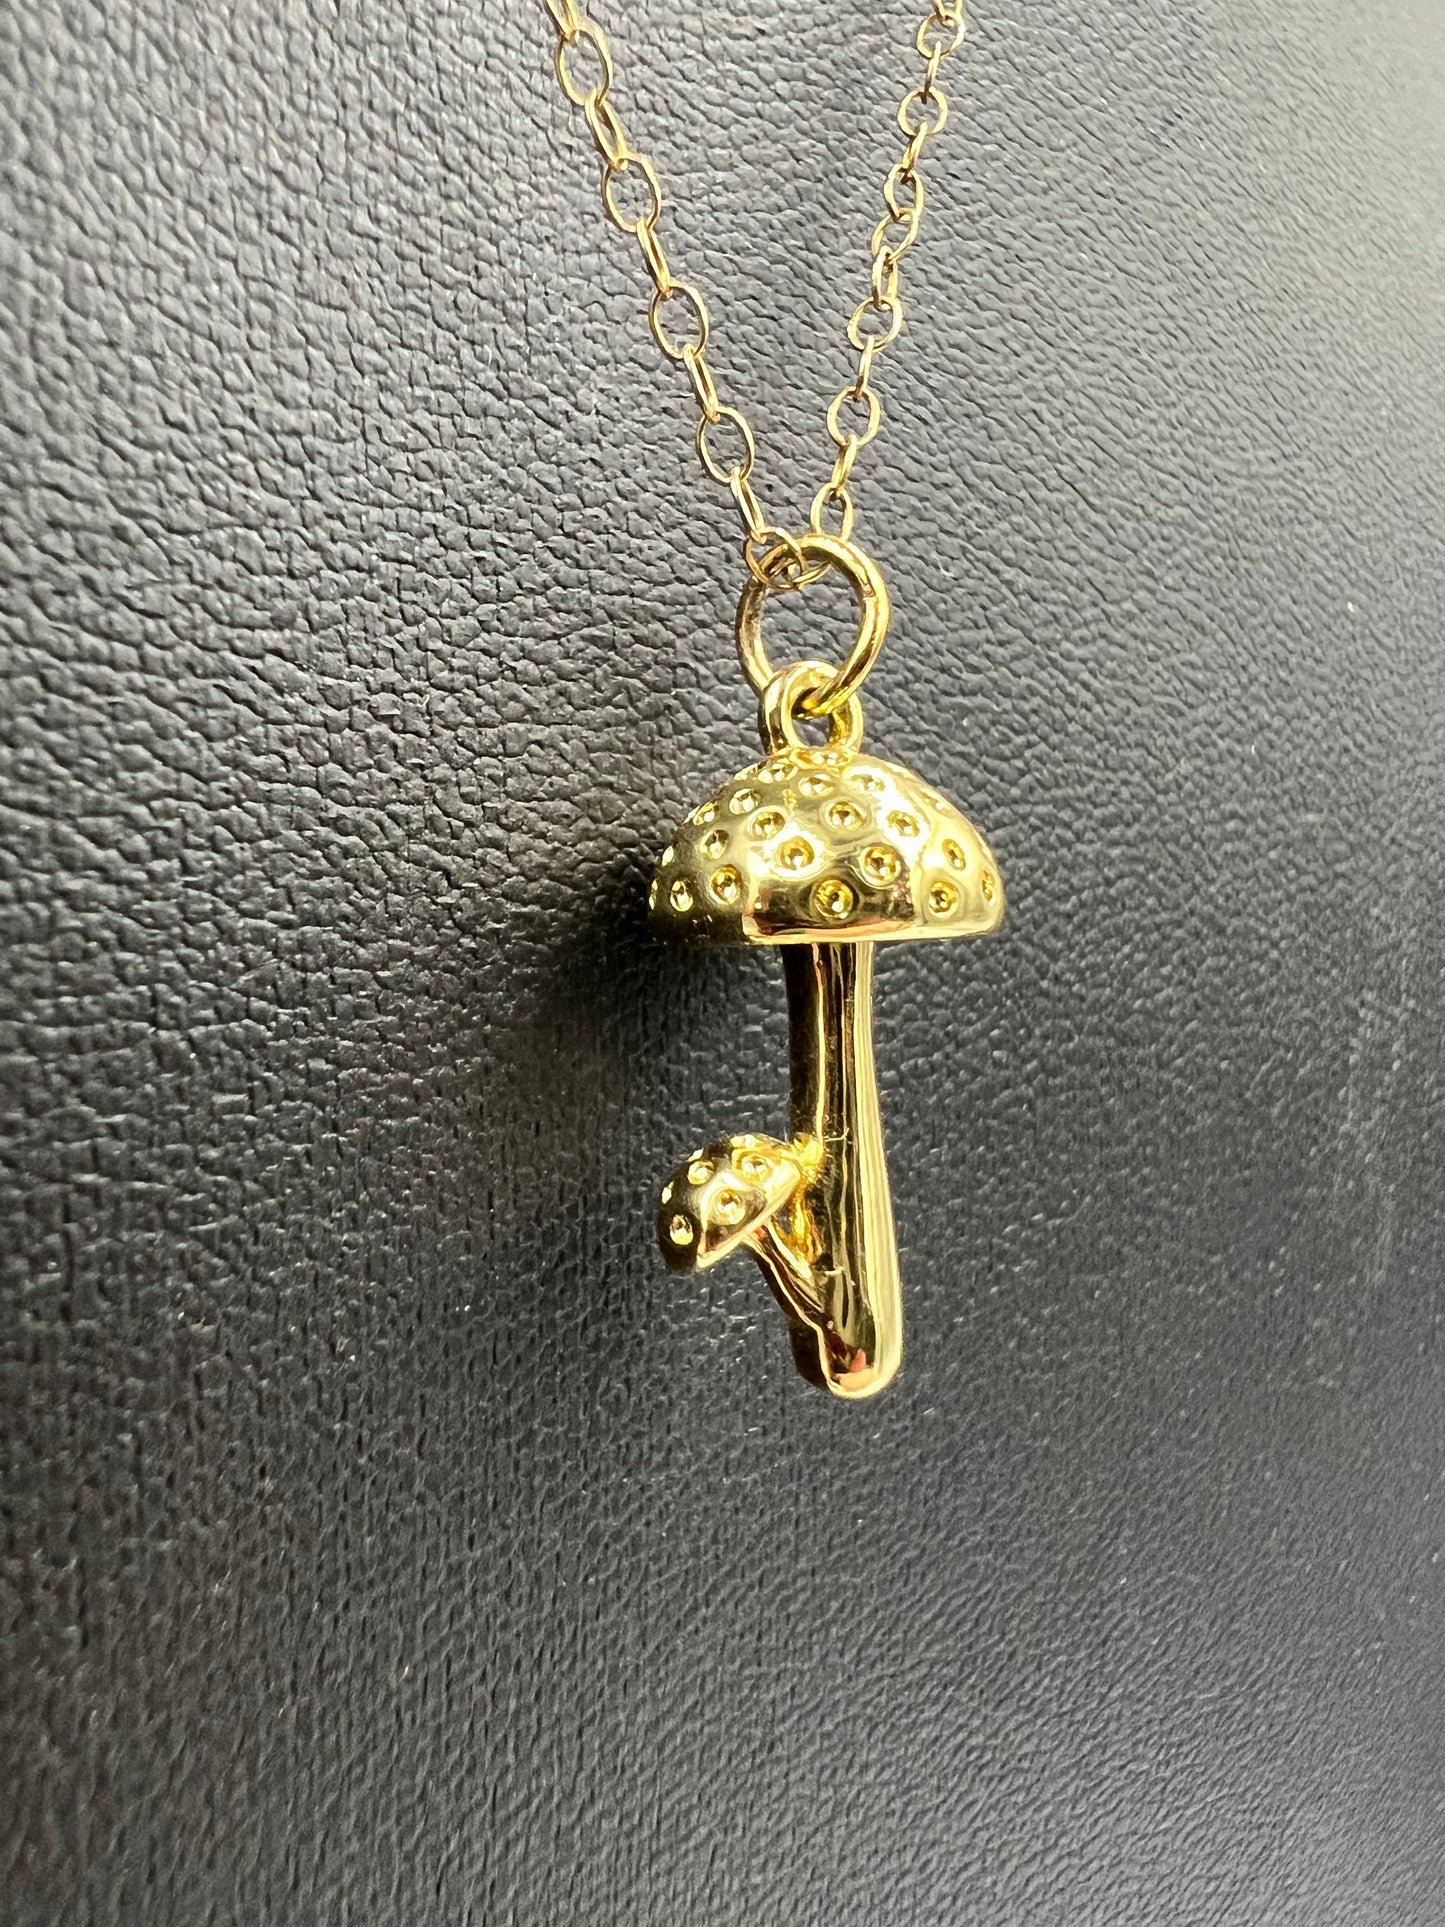 Sparkle Motion: Gold filled mushroom pendant